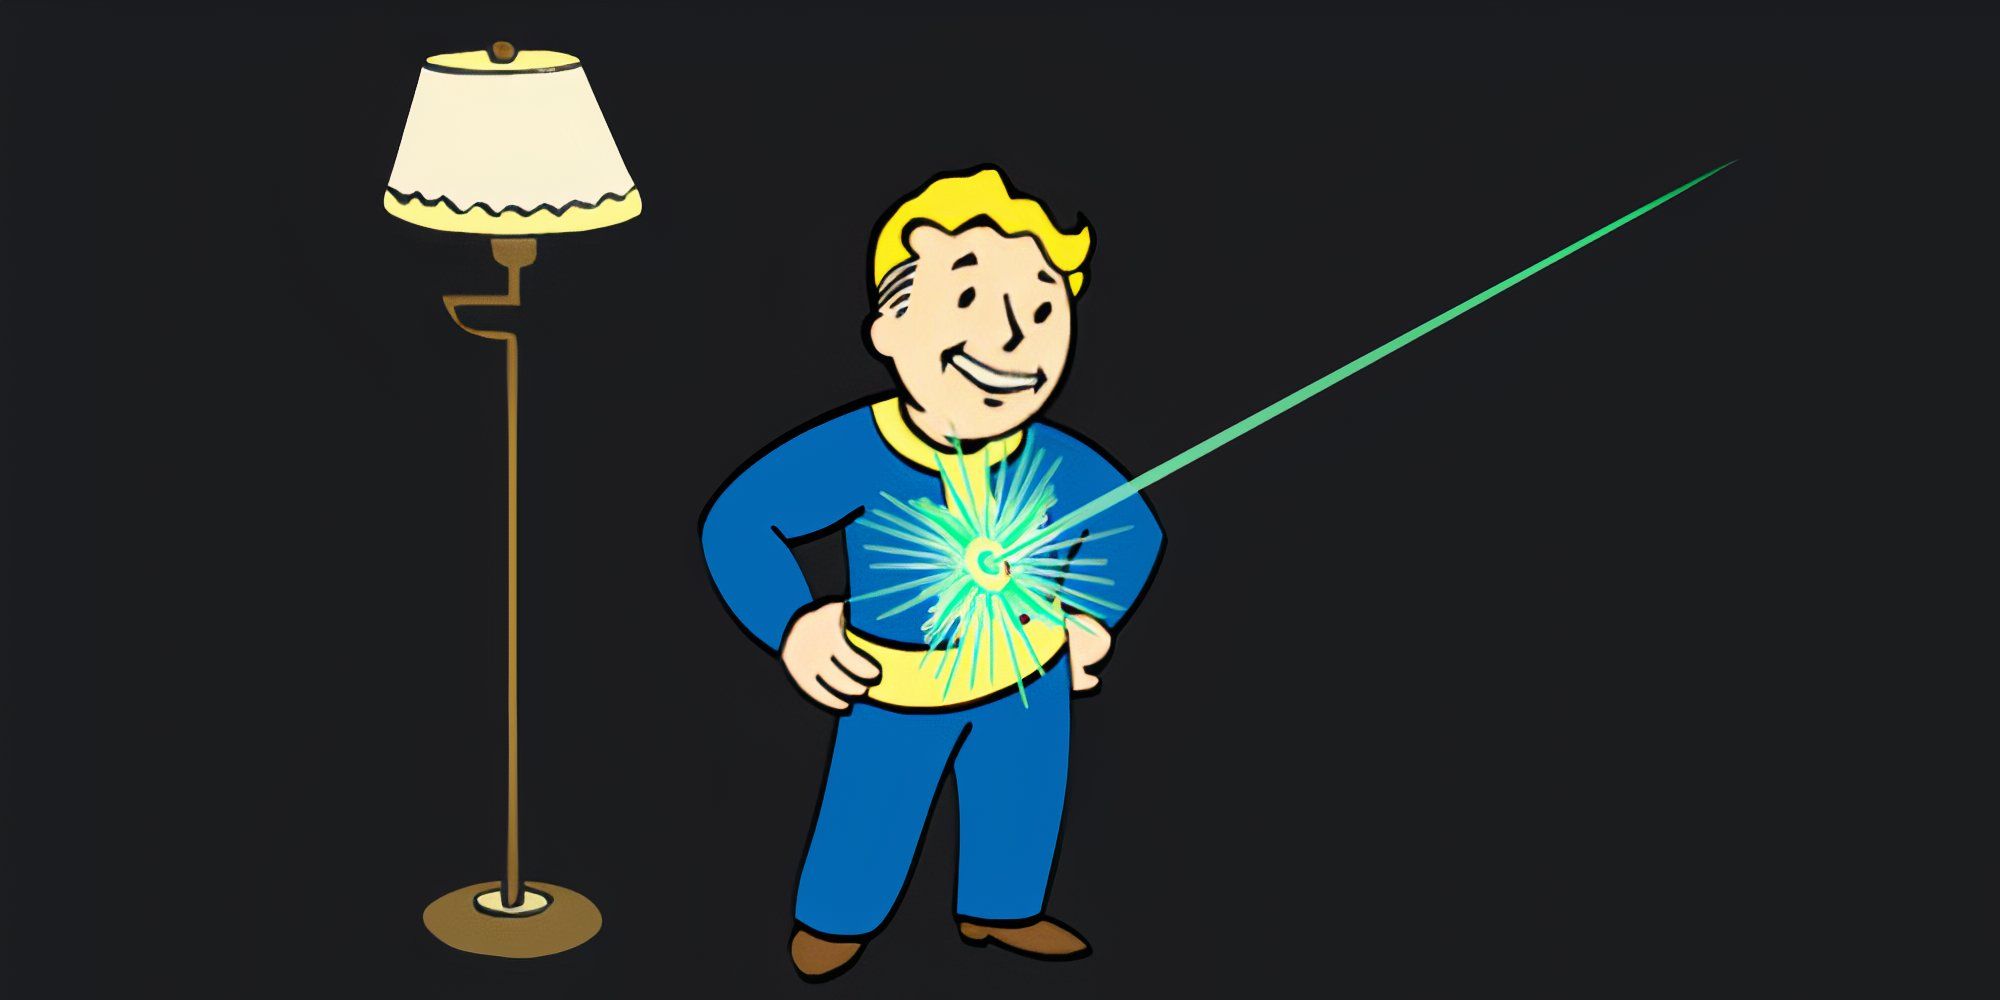 Vault Boy absorbs a laser beam while next to a lamp